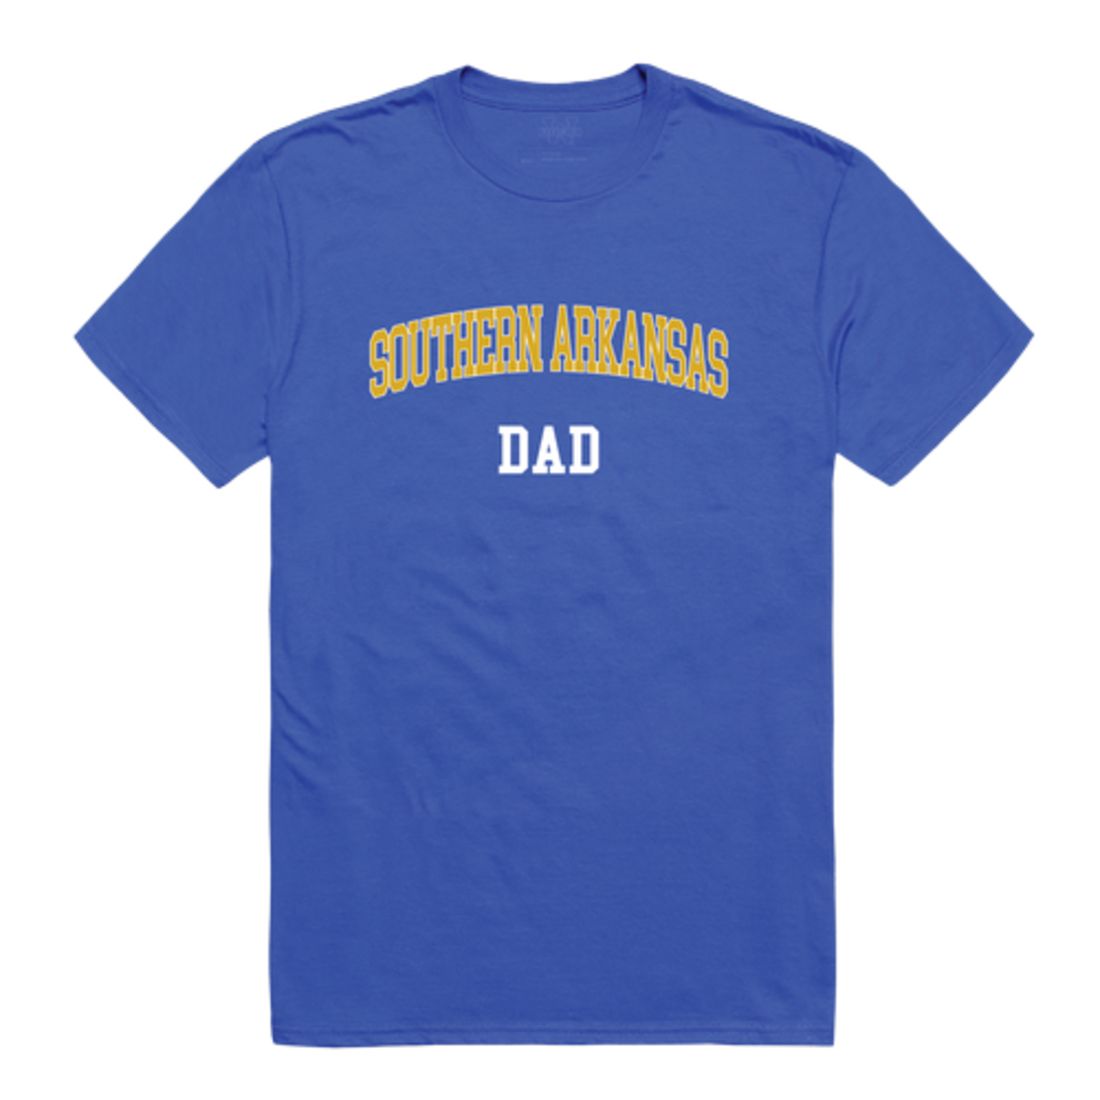 Southern Arkansas University Muleriders Dad T-Shirt